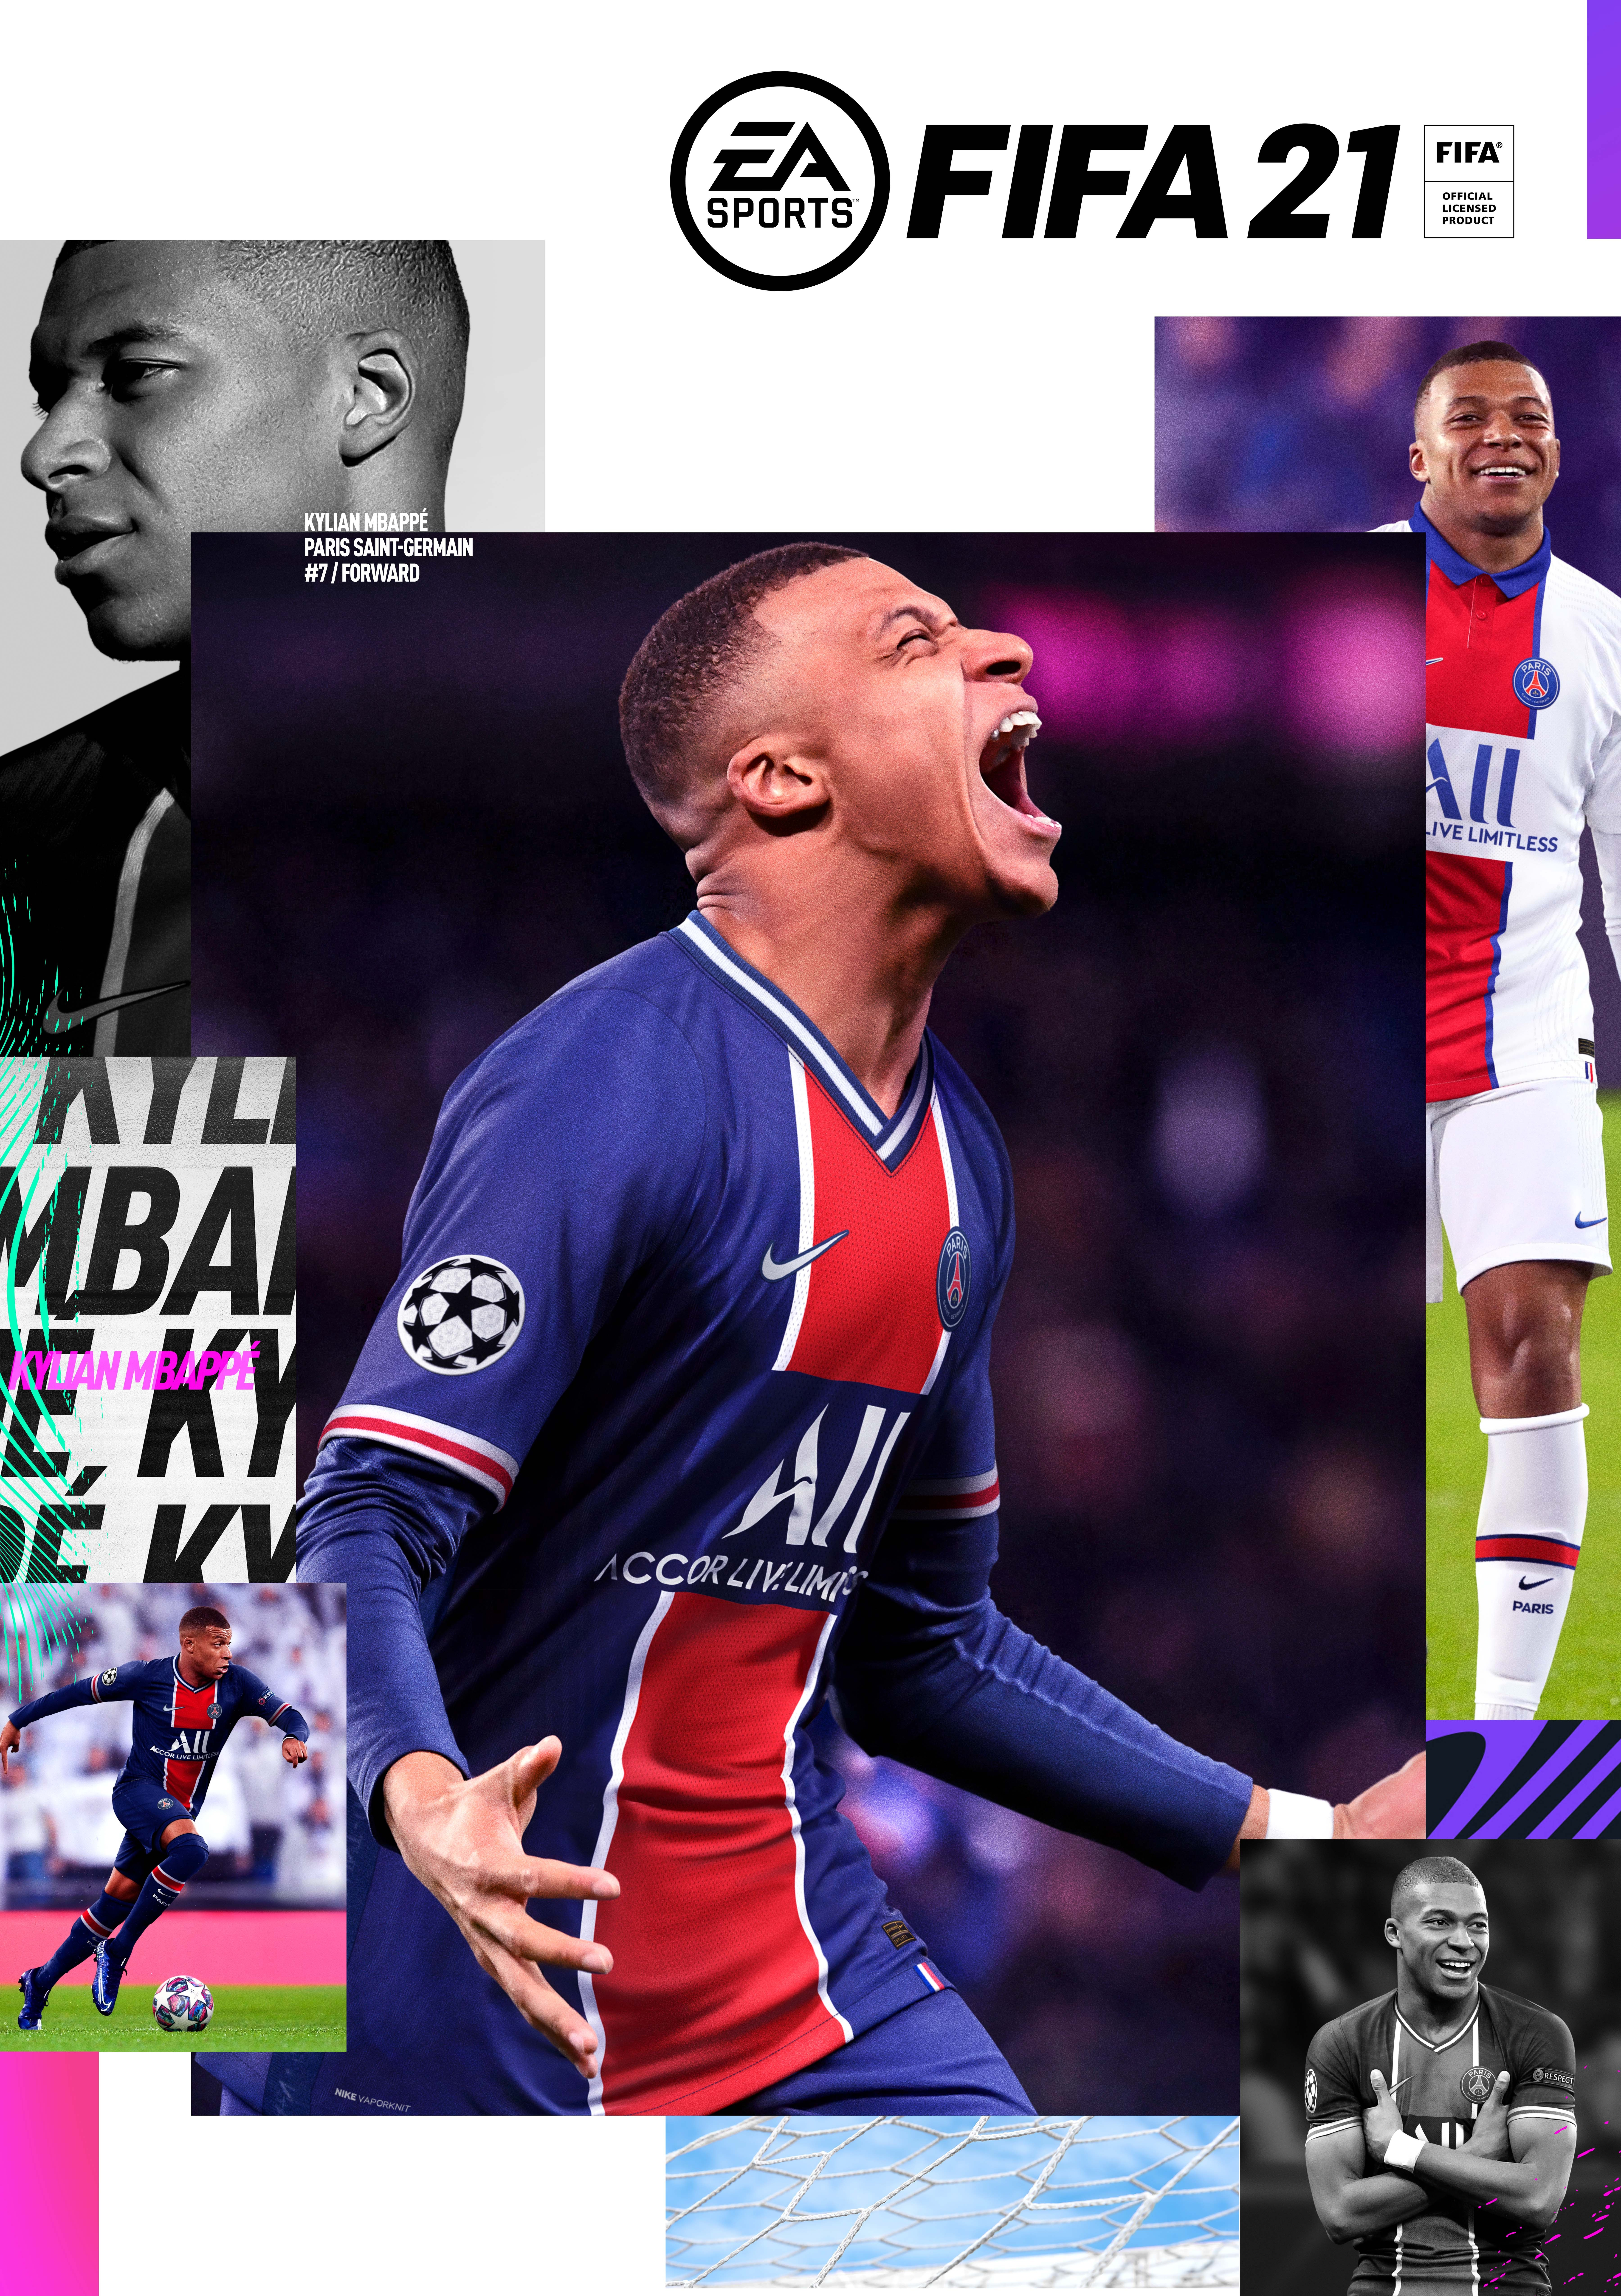 FIFA 21 (PS4) NEW